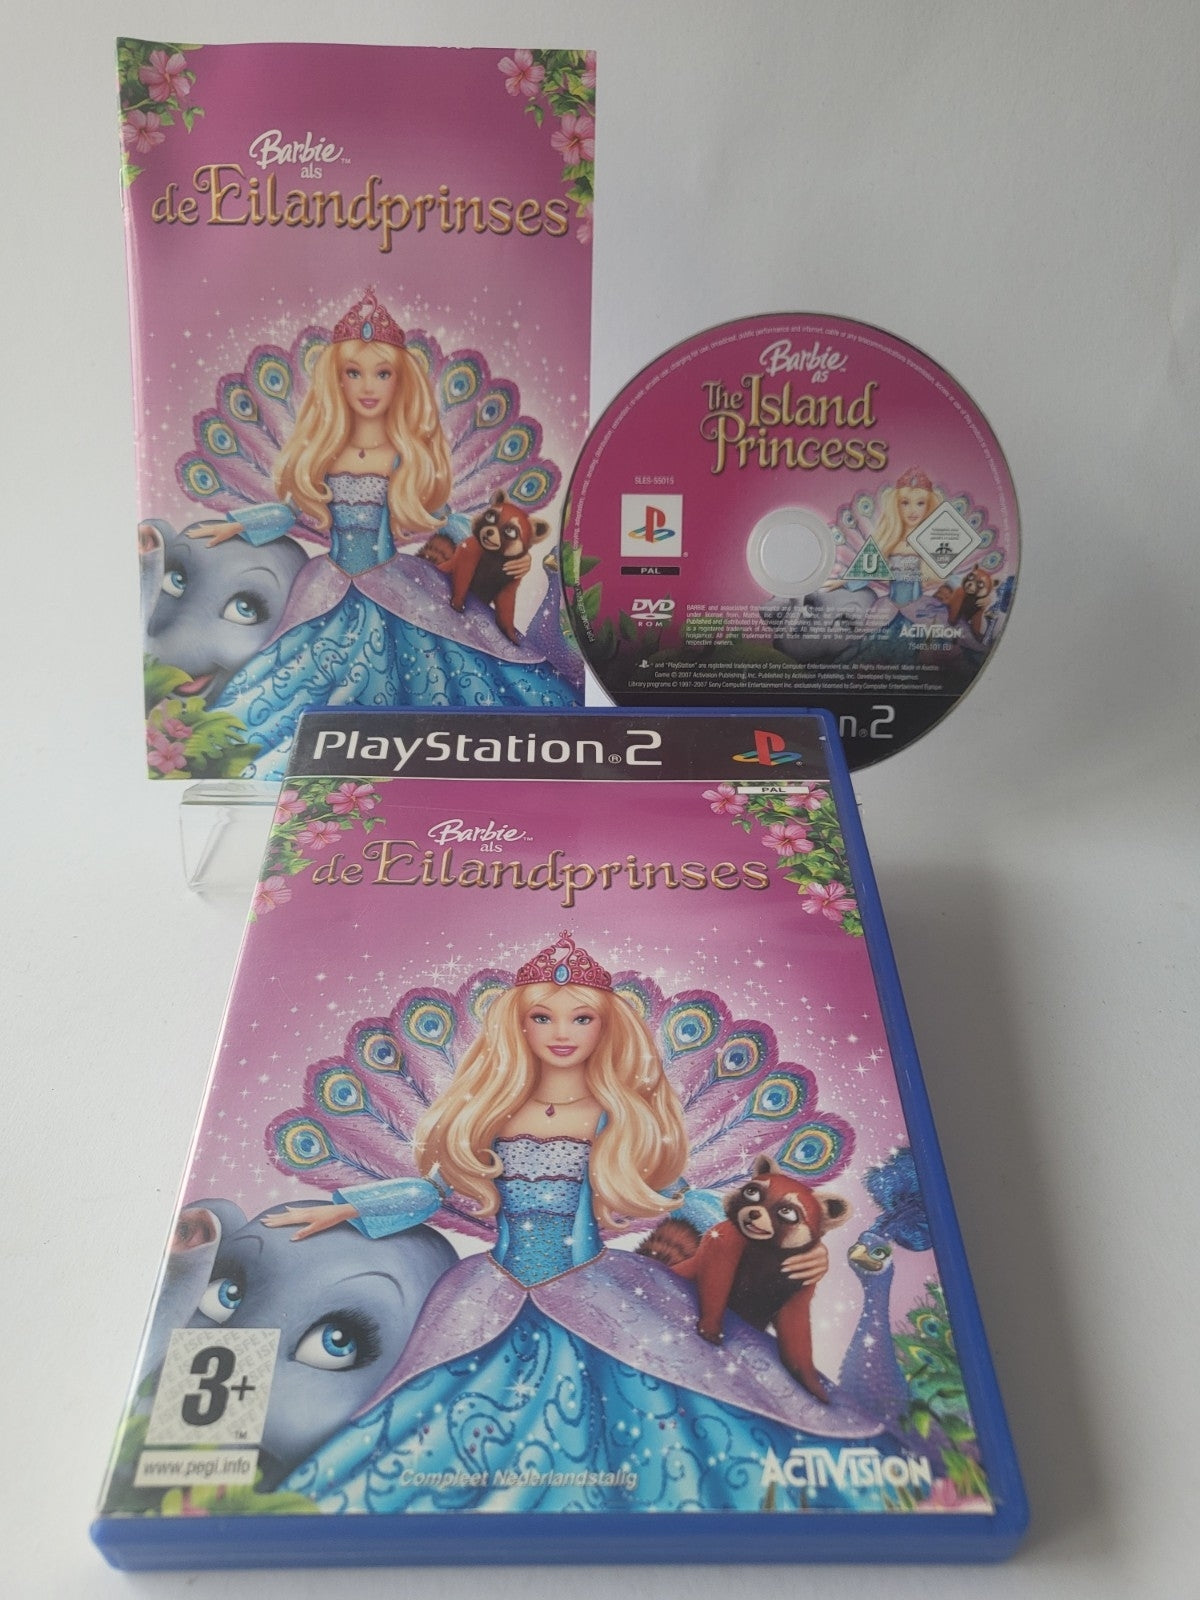 Barbie als de Eilandprinses Playstation 2